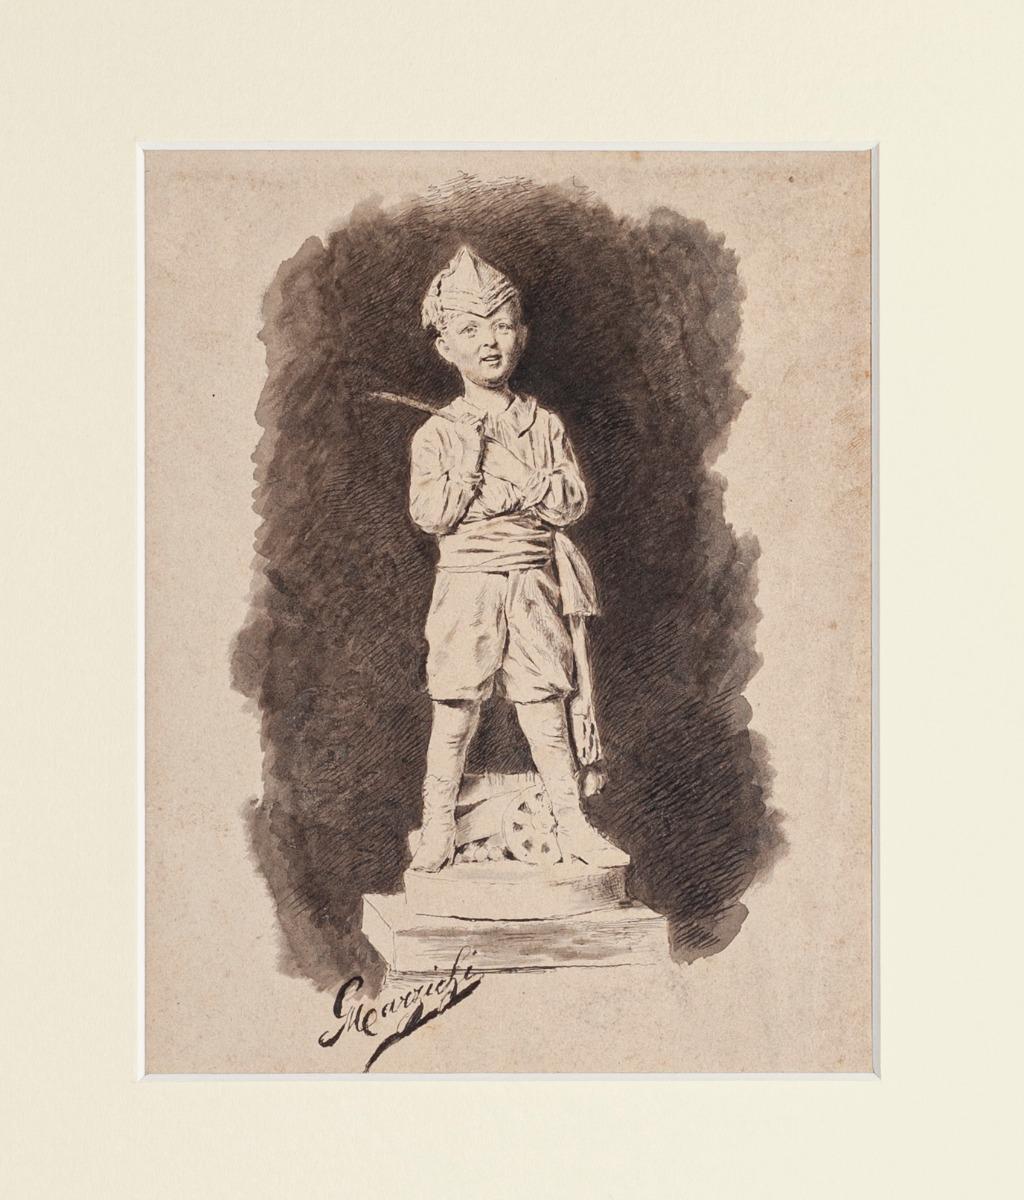 Soldat des Spielzeugs - Tinte und Aquarell signiert "Marzichi"" - Anfang des 20. Jahrhunderts